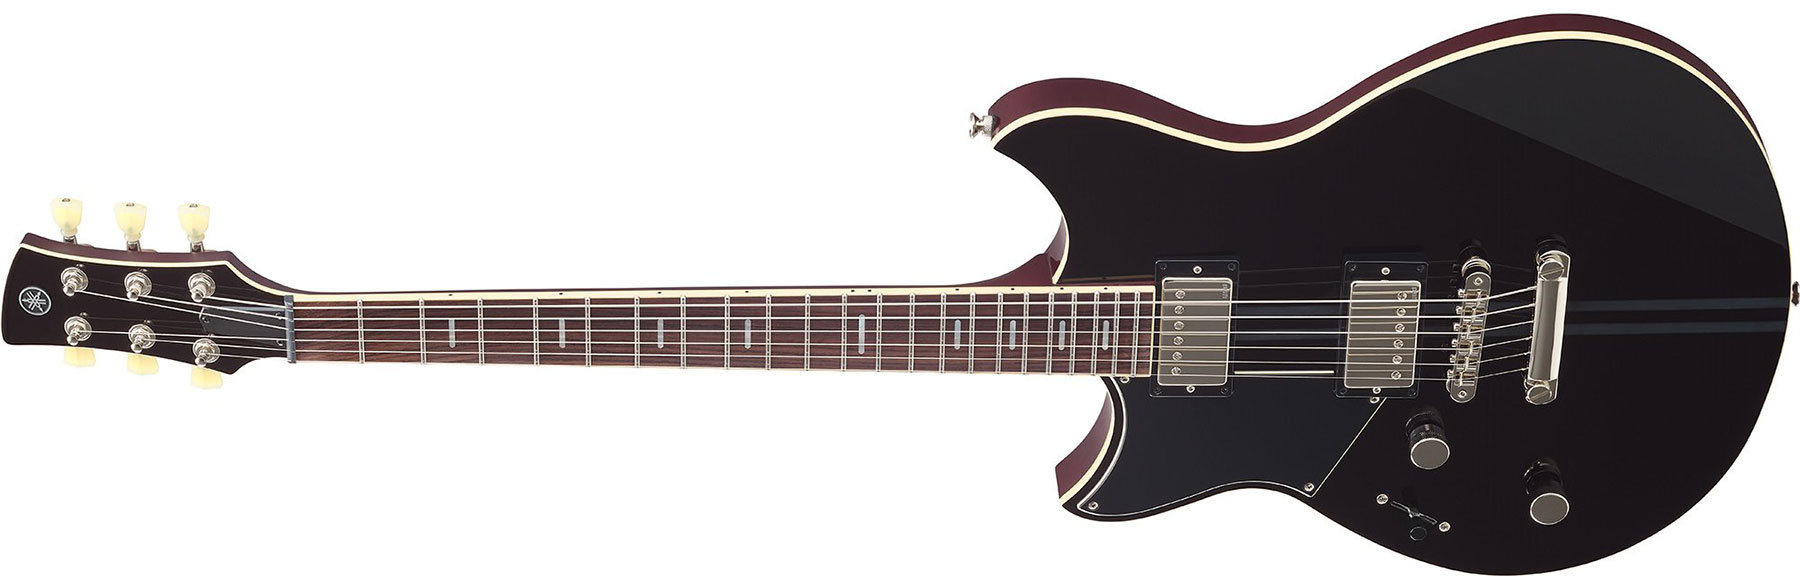 Yamaha Rss20l Revstar Standard Lh Gaucher Hh Ht Rw - Black - E-Gitarre für Linkshänder - Variation 1